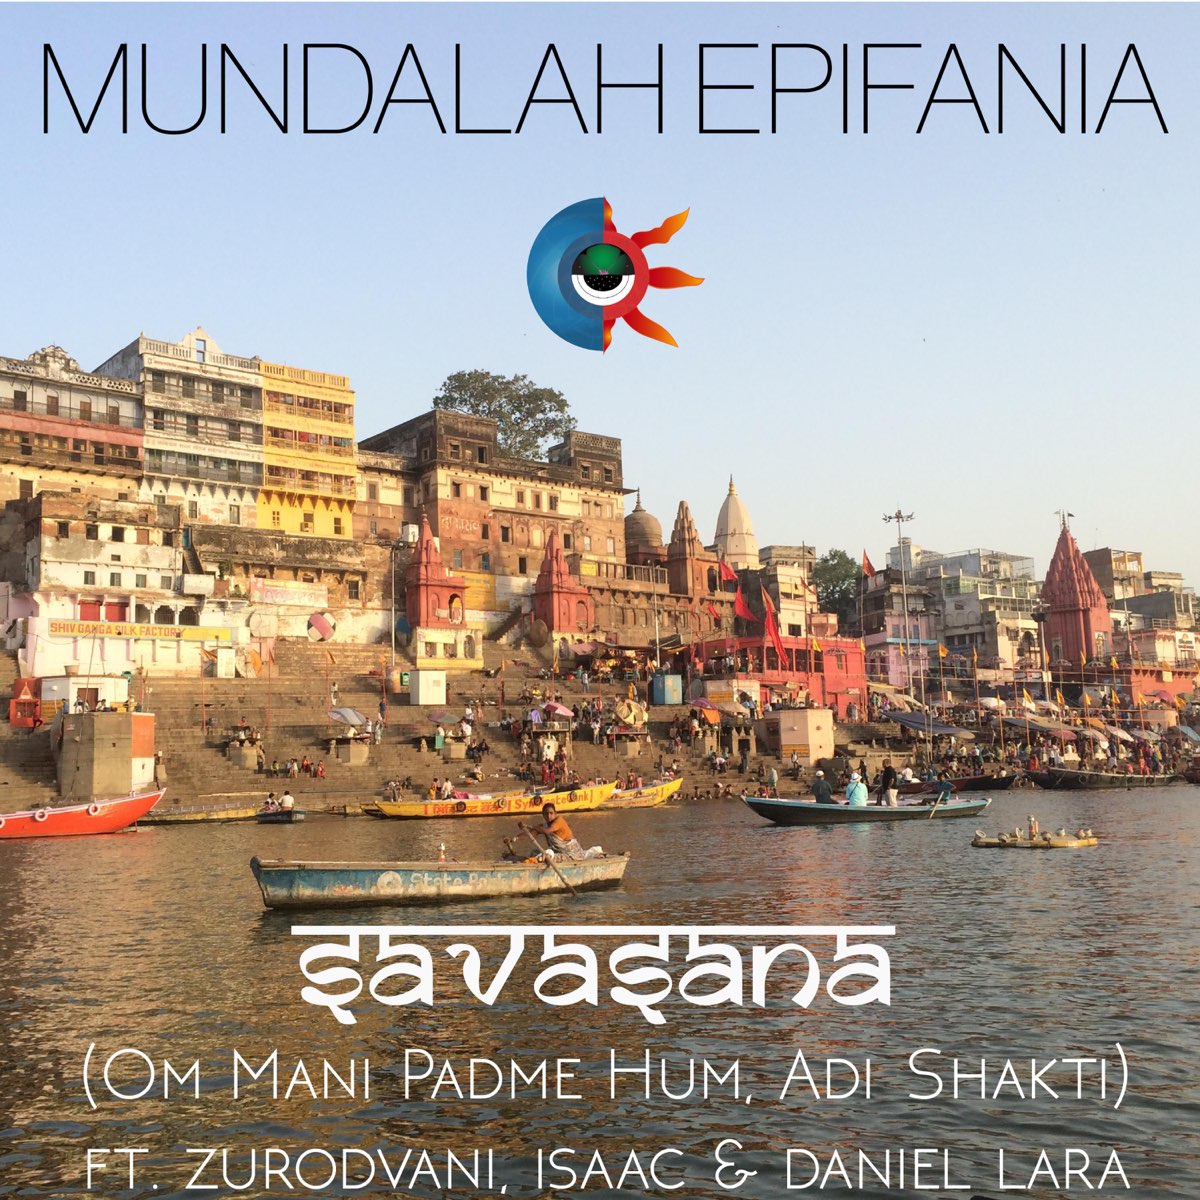 Savasana (Om Mani Padme Hum, Adi Shakti) [feat. Zurodvani, Isaac & Daniel  Lara] - EP de Mundalah Epifania en Apple Music